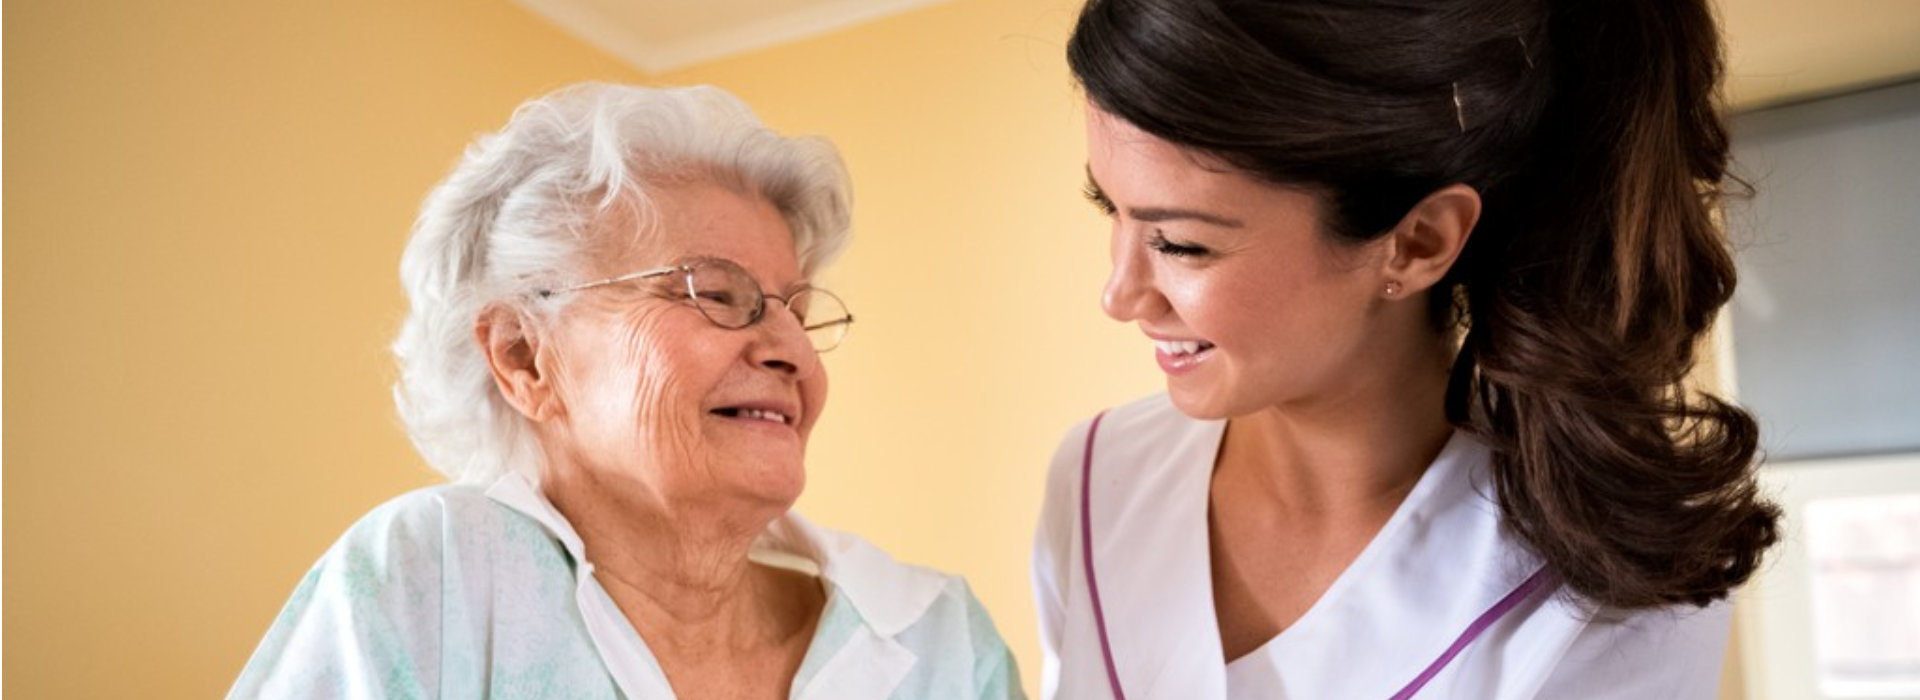 caregiver smiling with senior citizen part 3